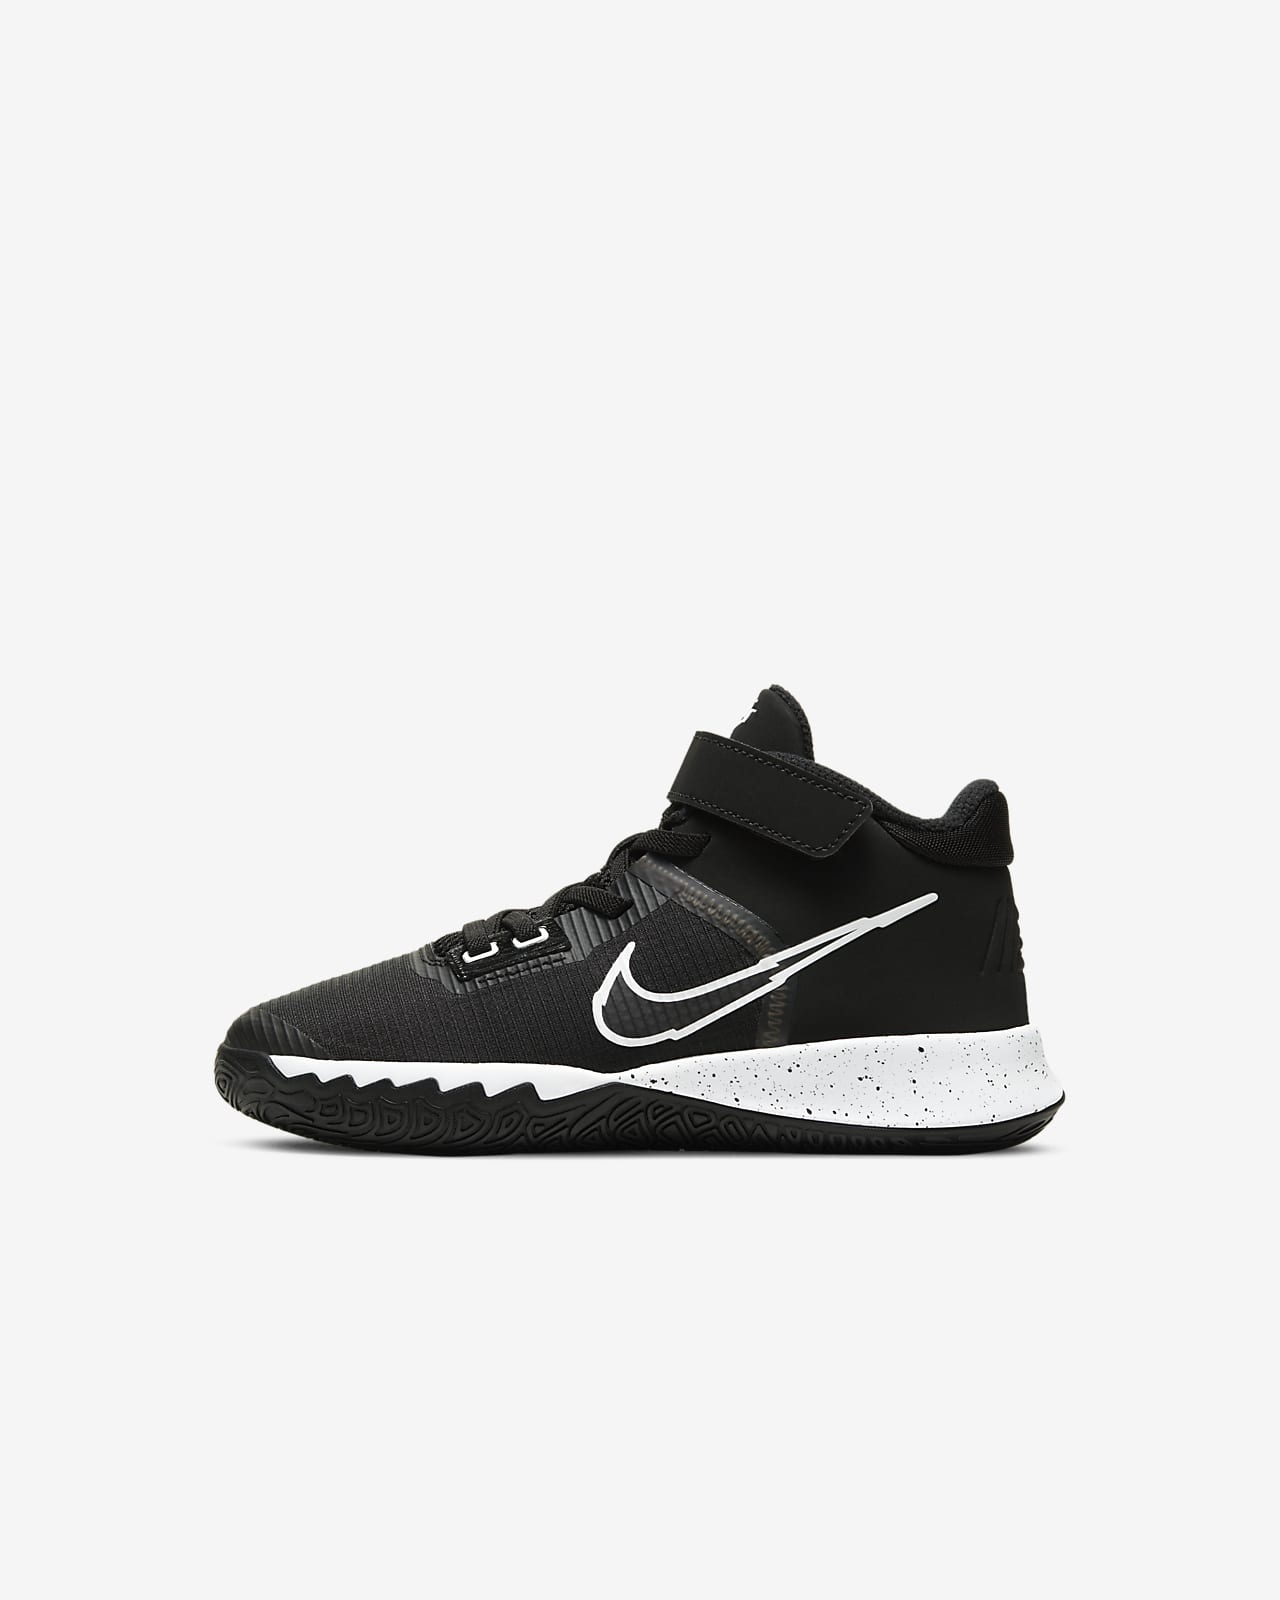 Kyrie Flytrap 4 Younger Kids' Shoe. Nike ID